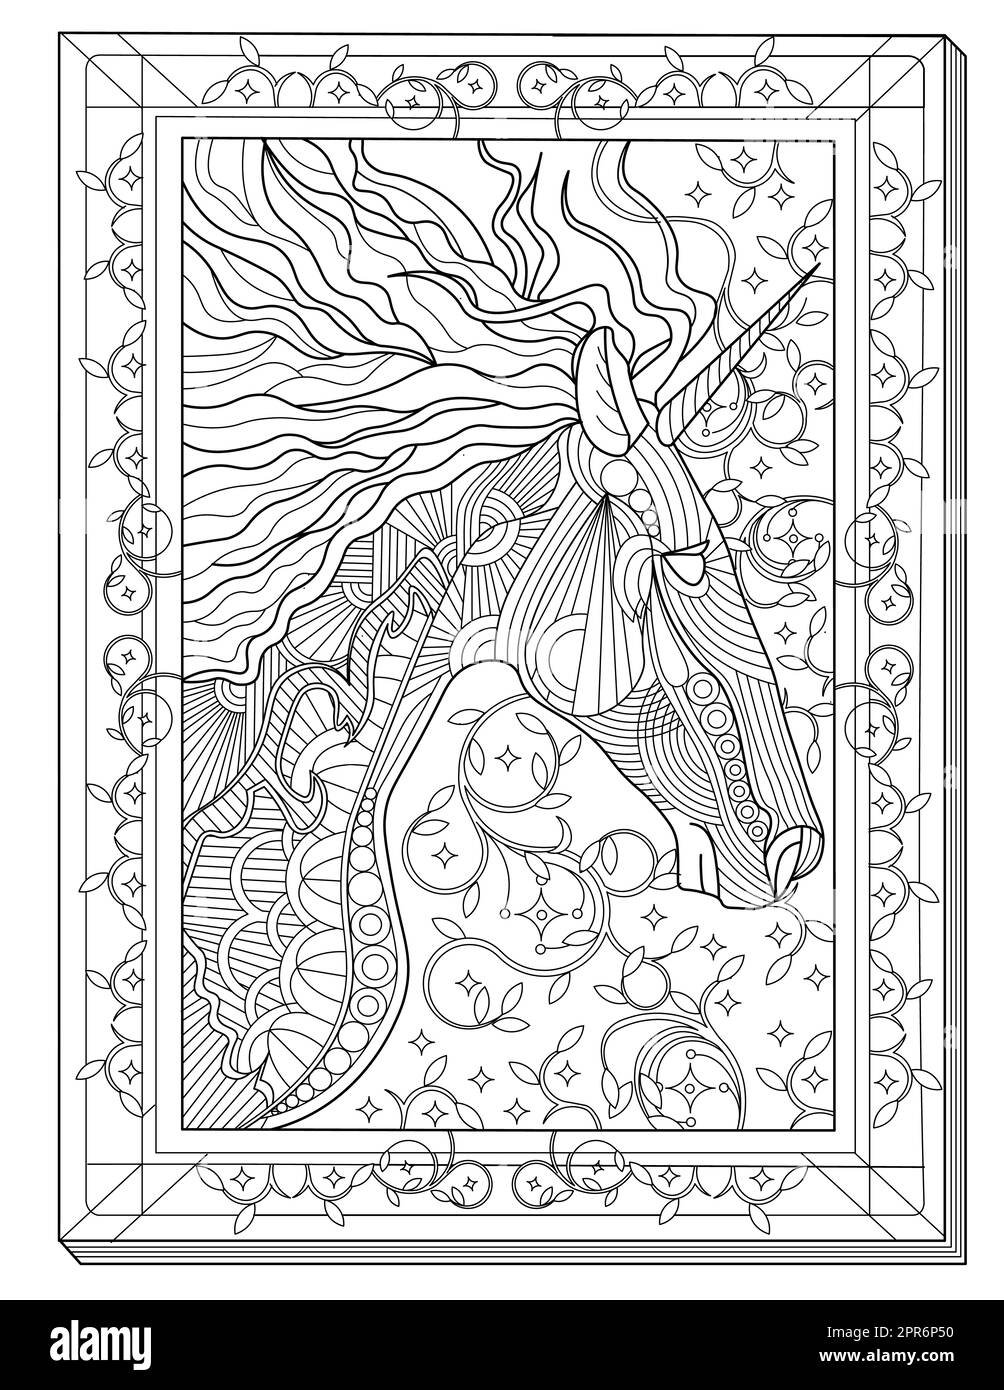 Unicorn Head Facing Sideward Inside A Rectangular Frame Line Drawing. Stock Photo